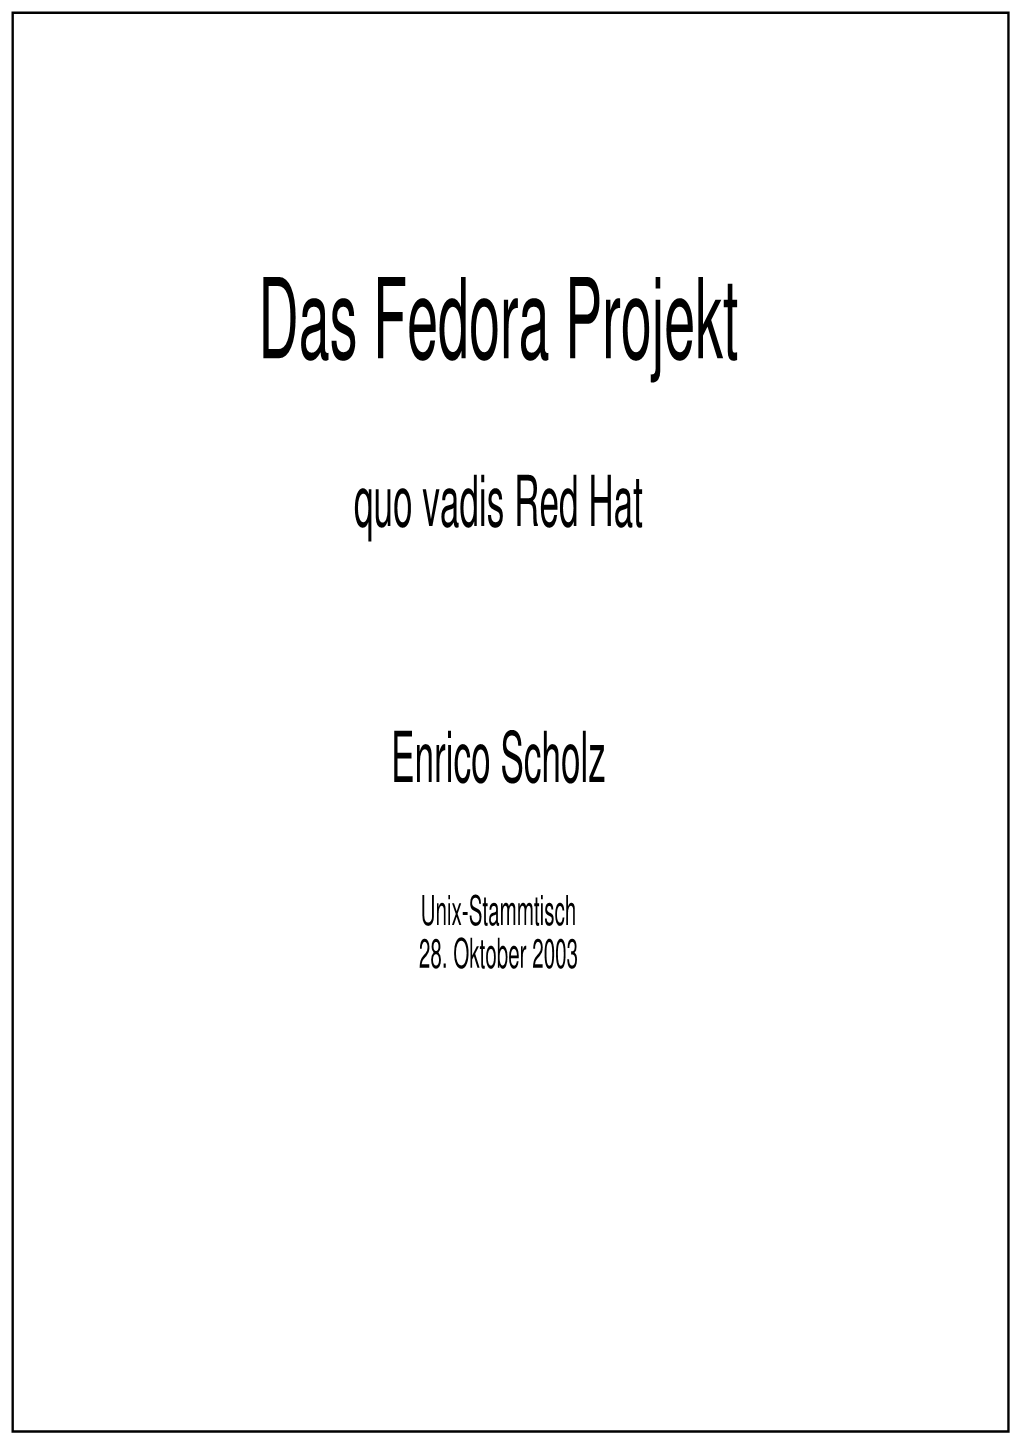 Das Fedora Projekt